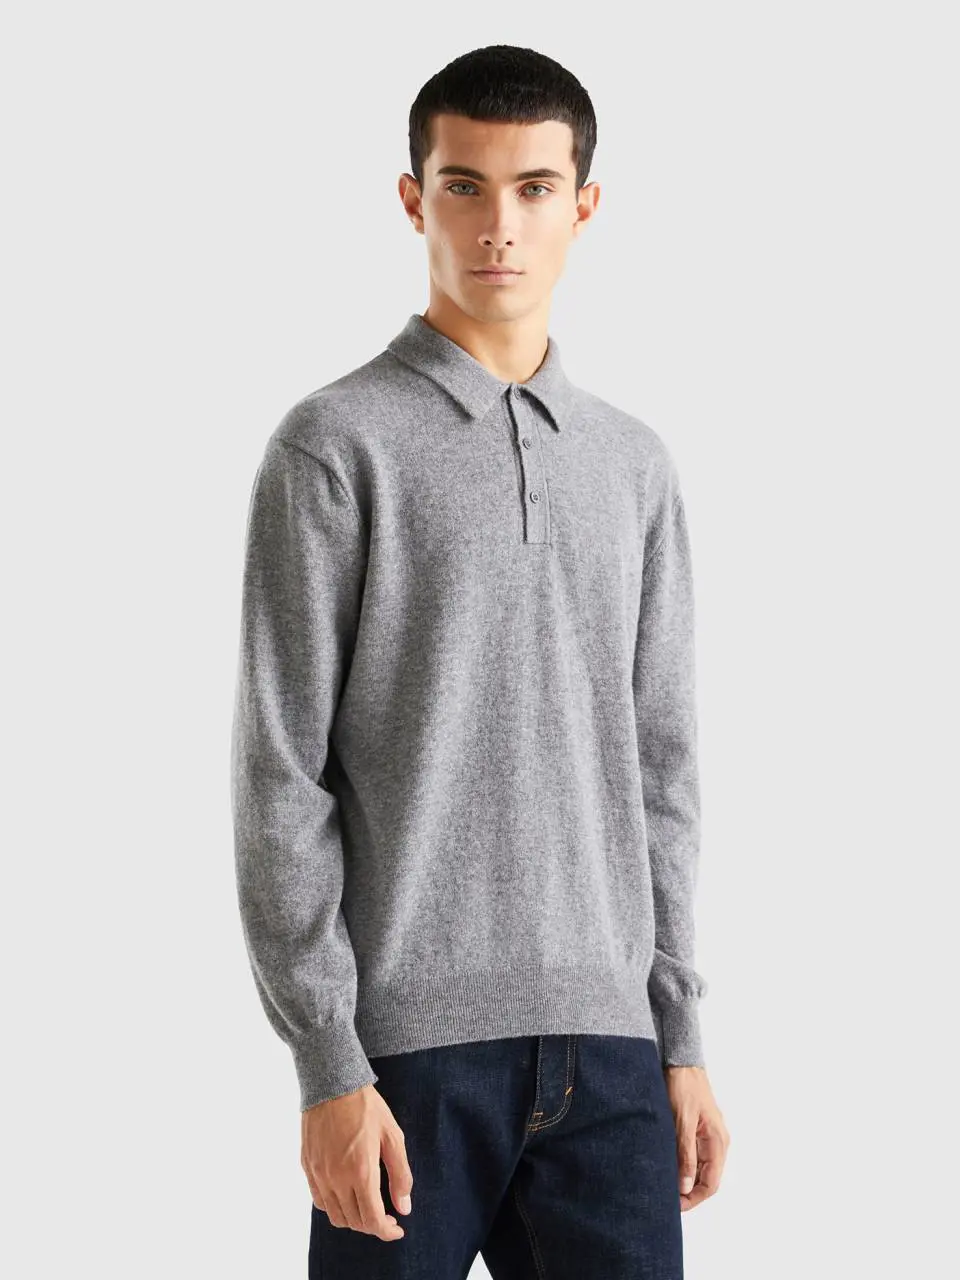 Benetton gray polo shirt in pure merino wool. 1